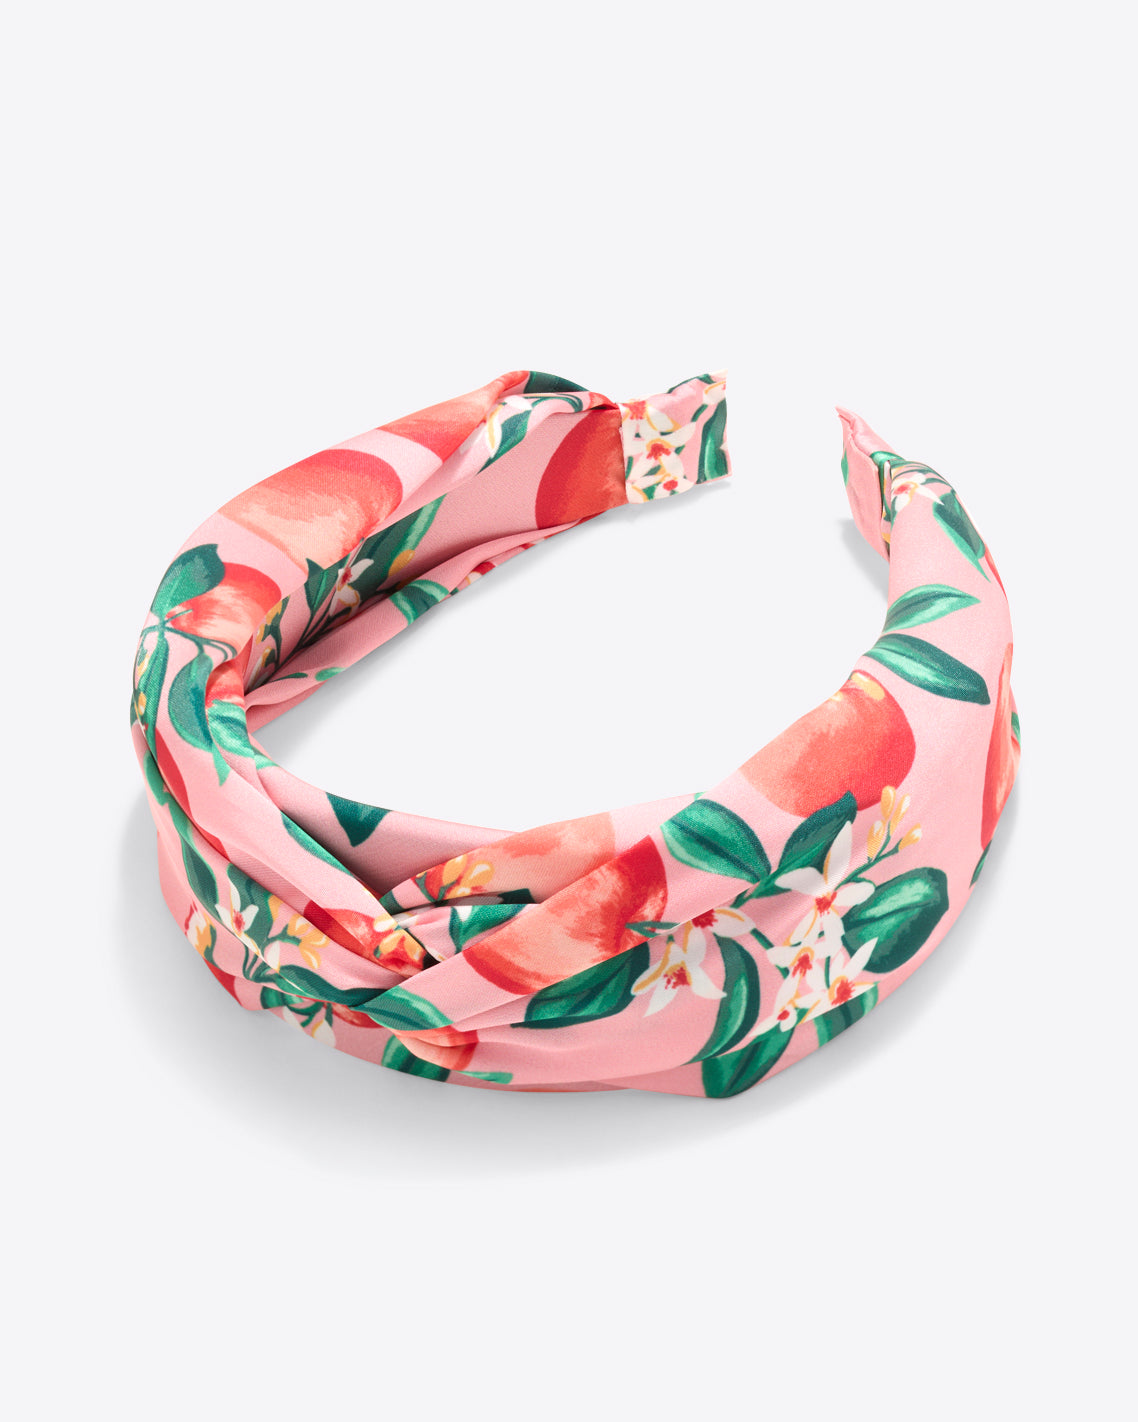 Twist Headband in Apple Blossom Floral